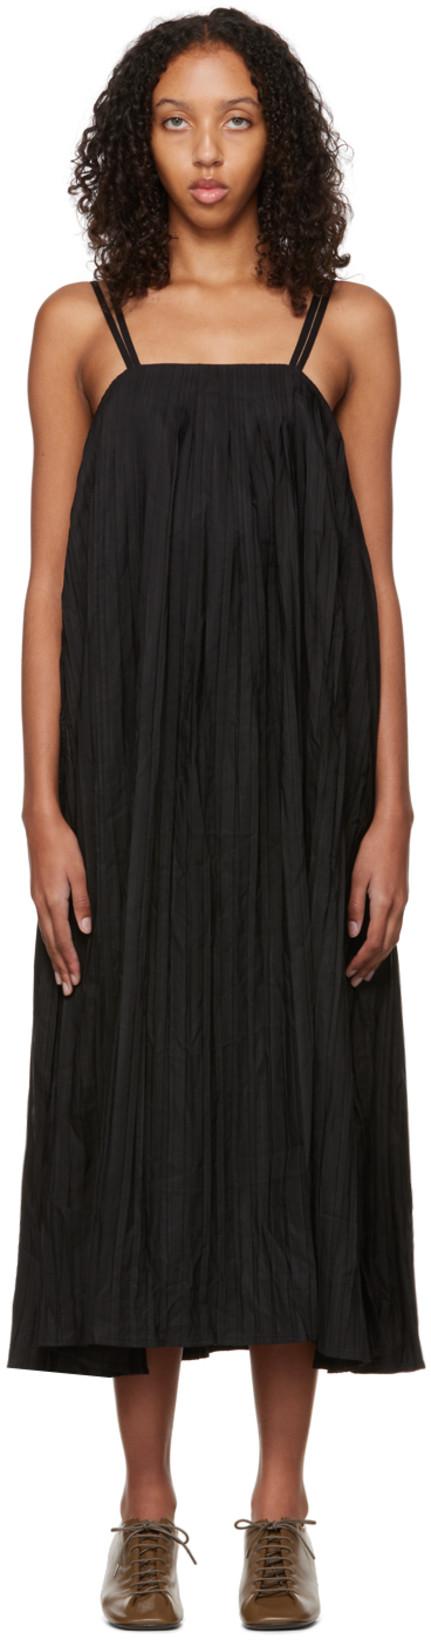 Black Pleated Midi Dress by DEVEAUX NEW YORK